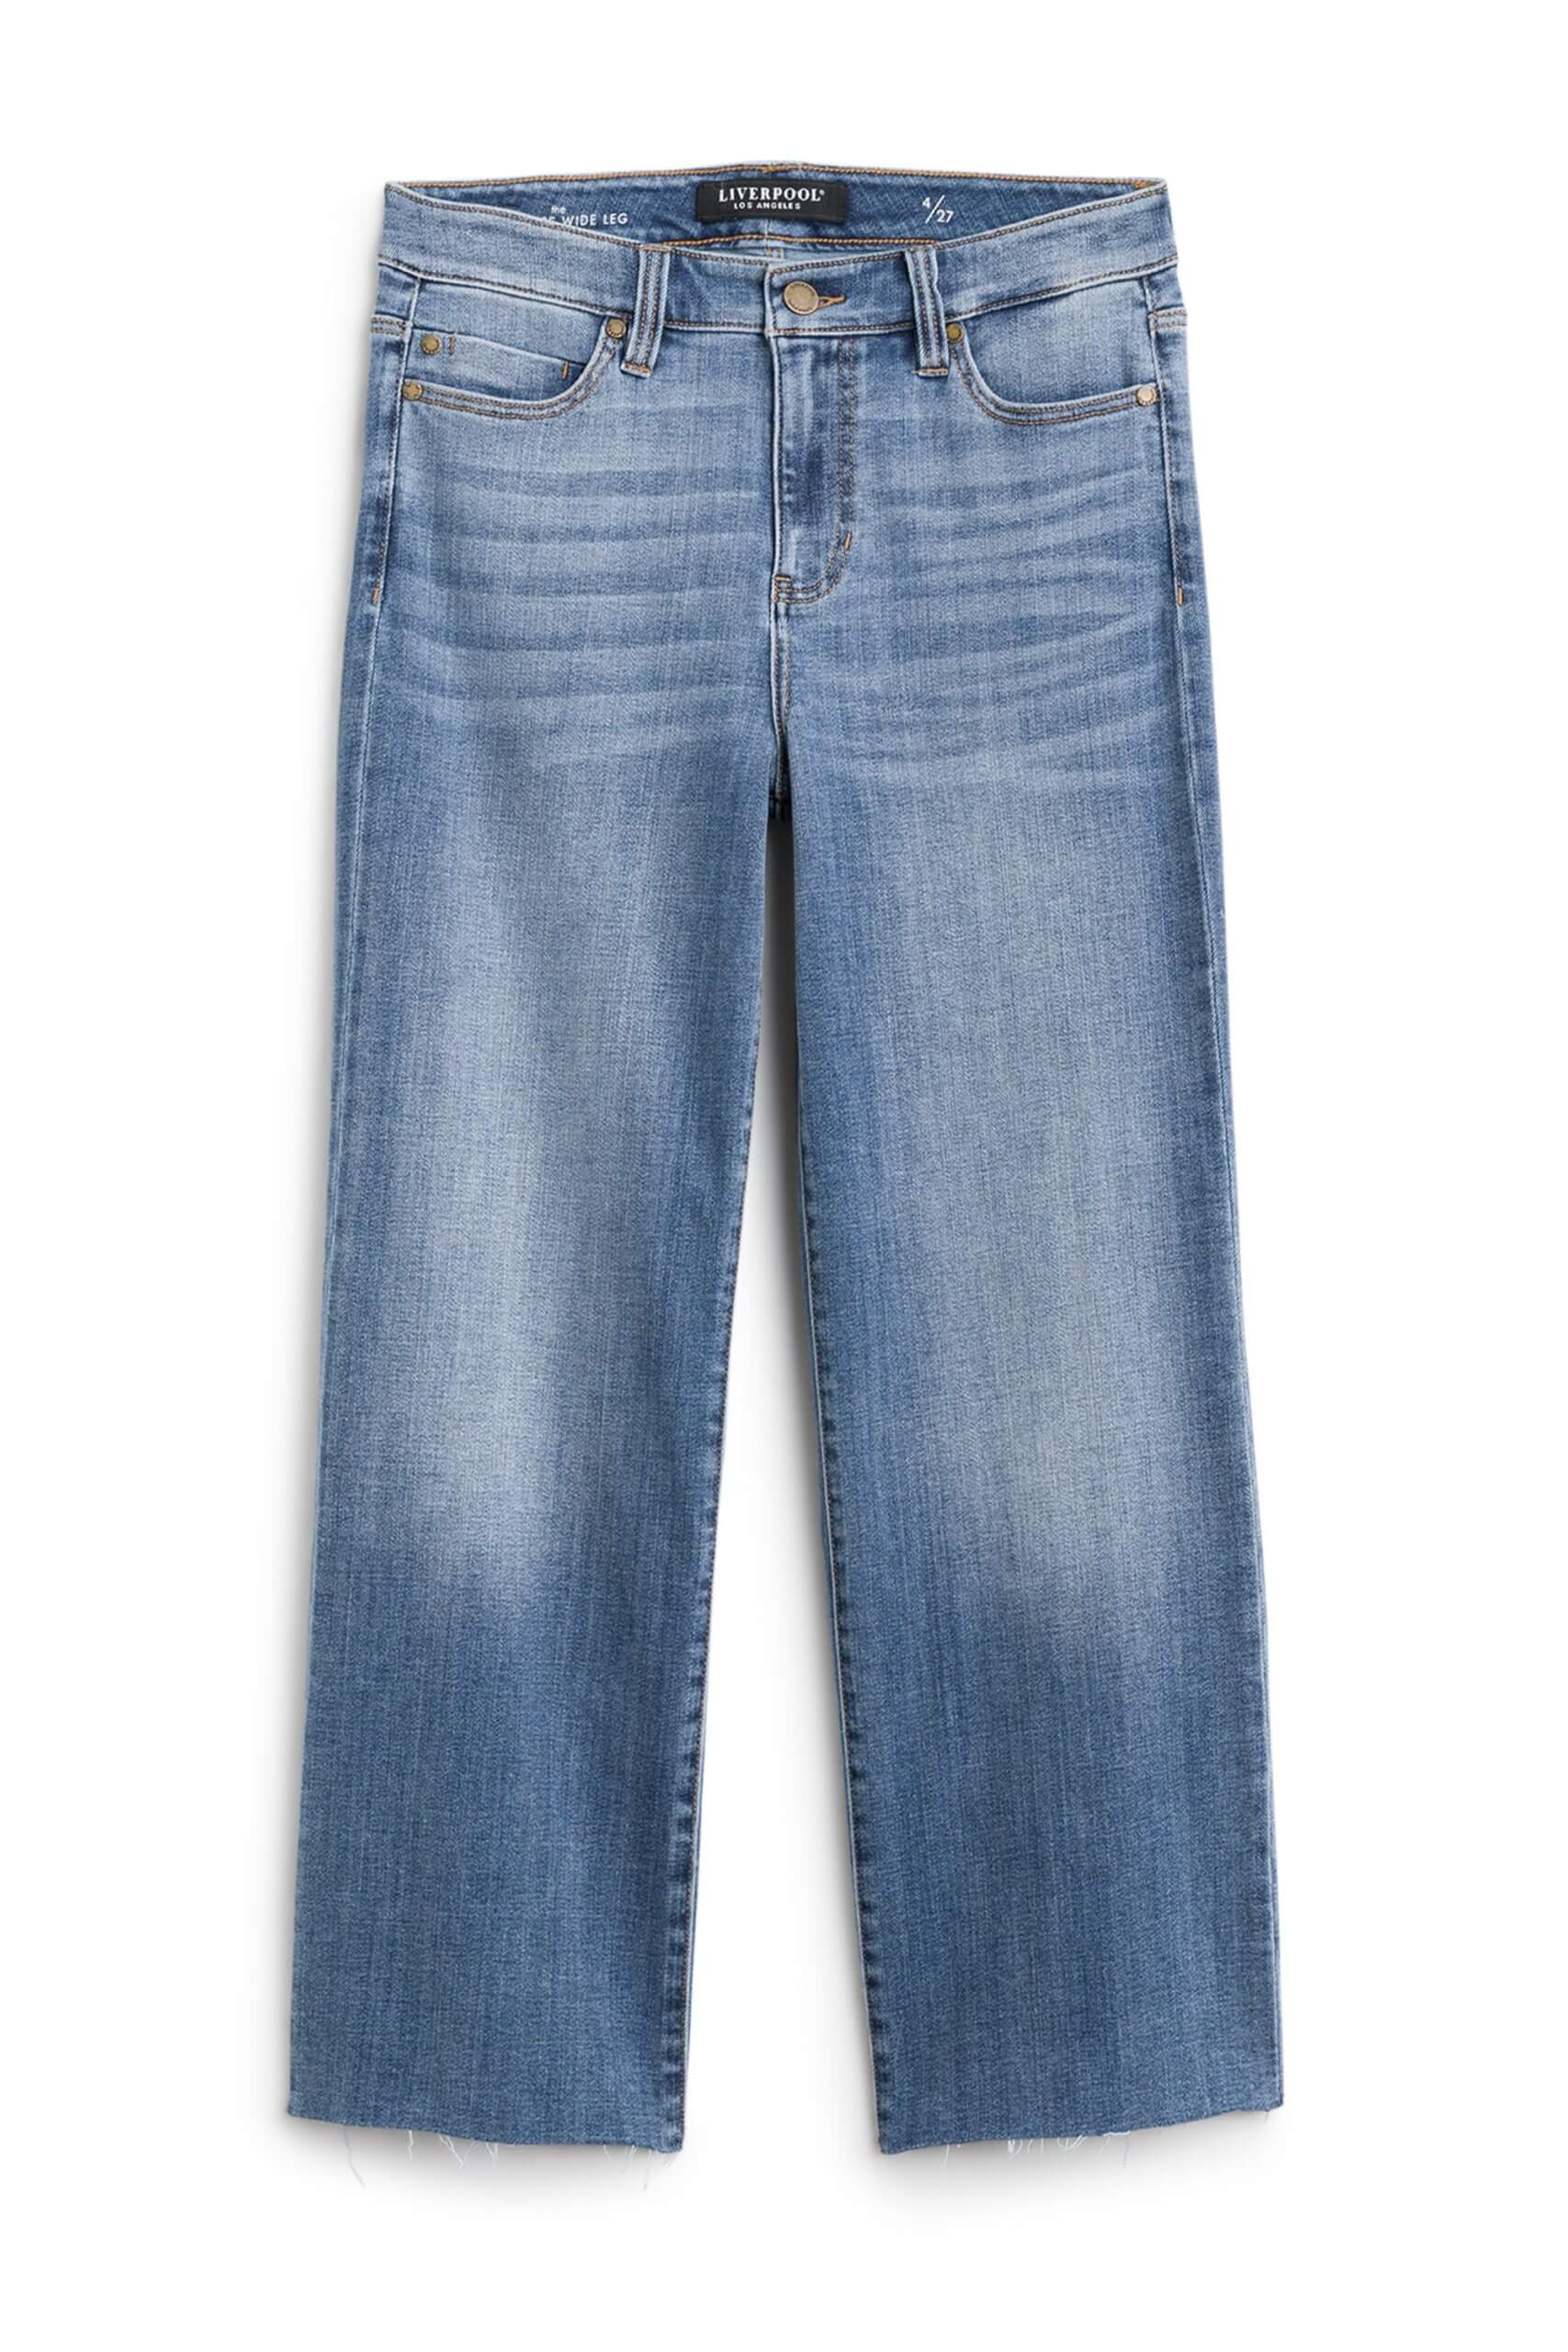 Styling Wide Leg Cropped Pants  Wide leg cropped jeans, Wide leg